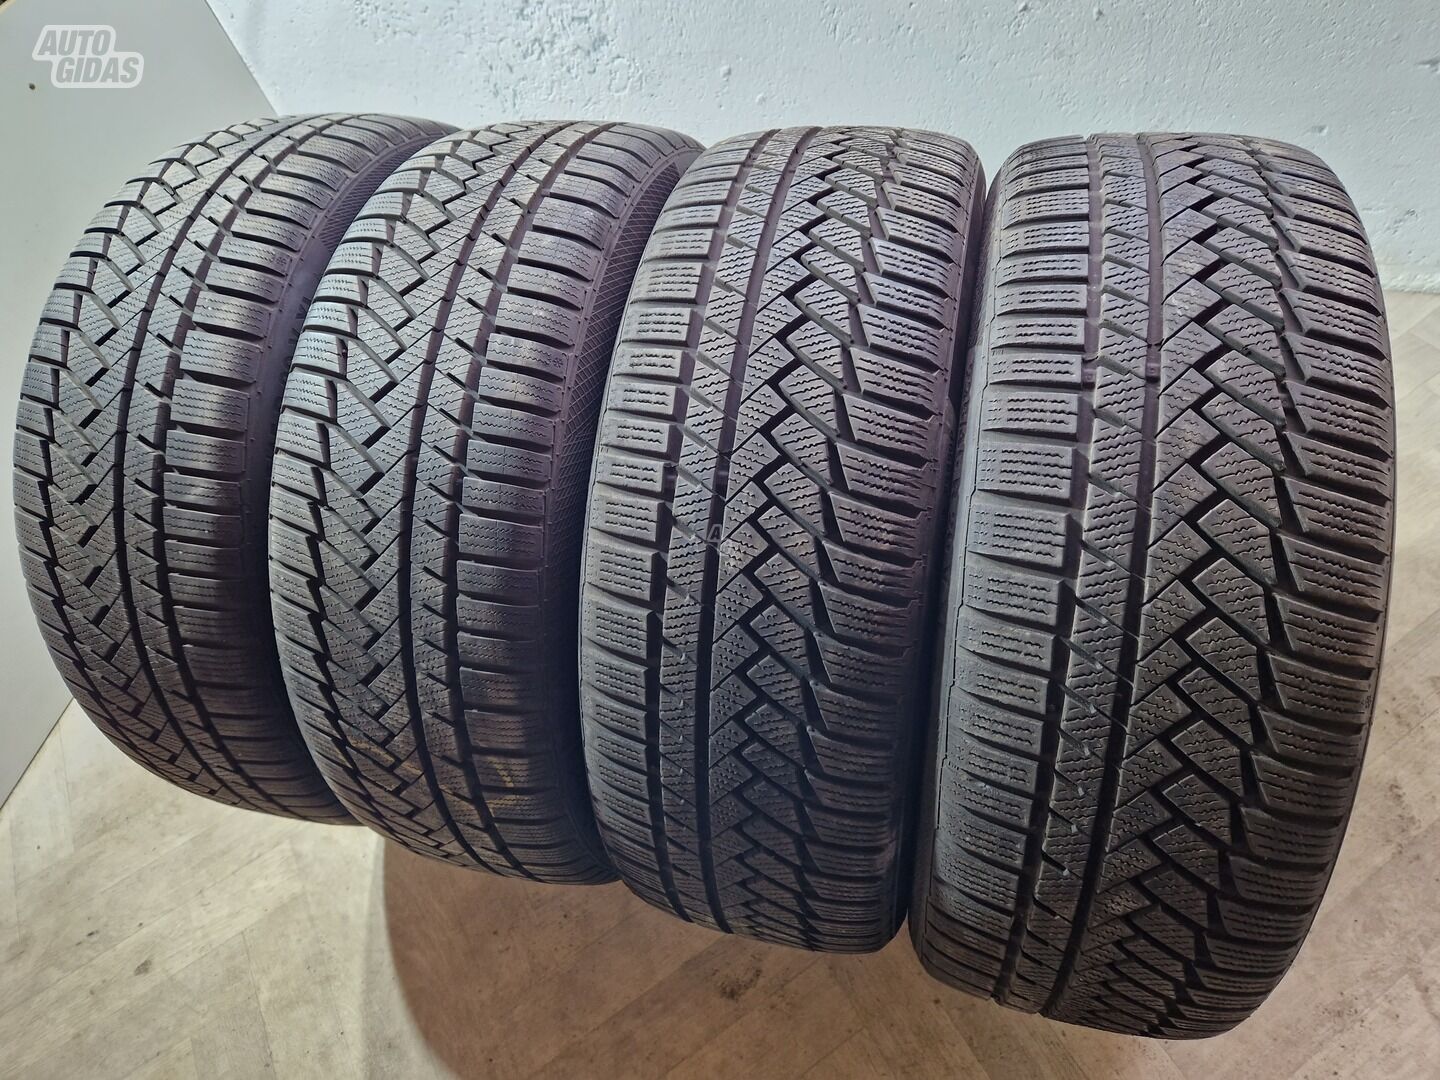 Continental 7-8mm, 2019m R20 winter tyres passanger car